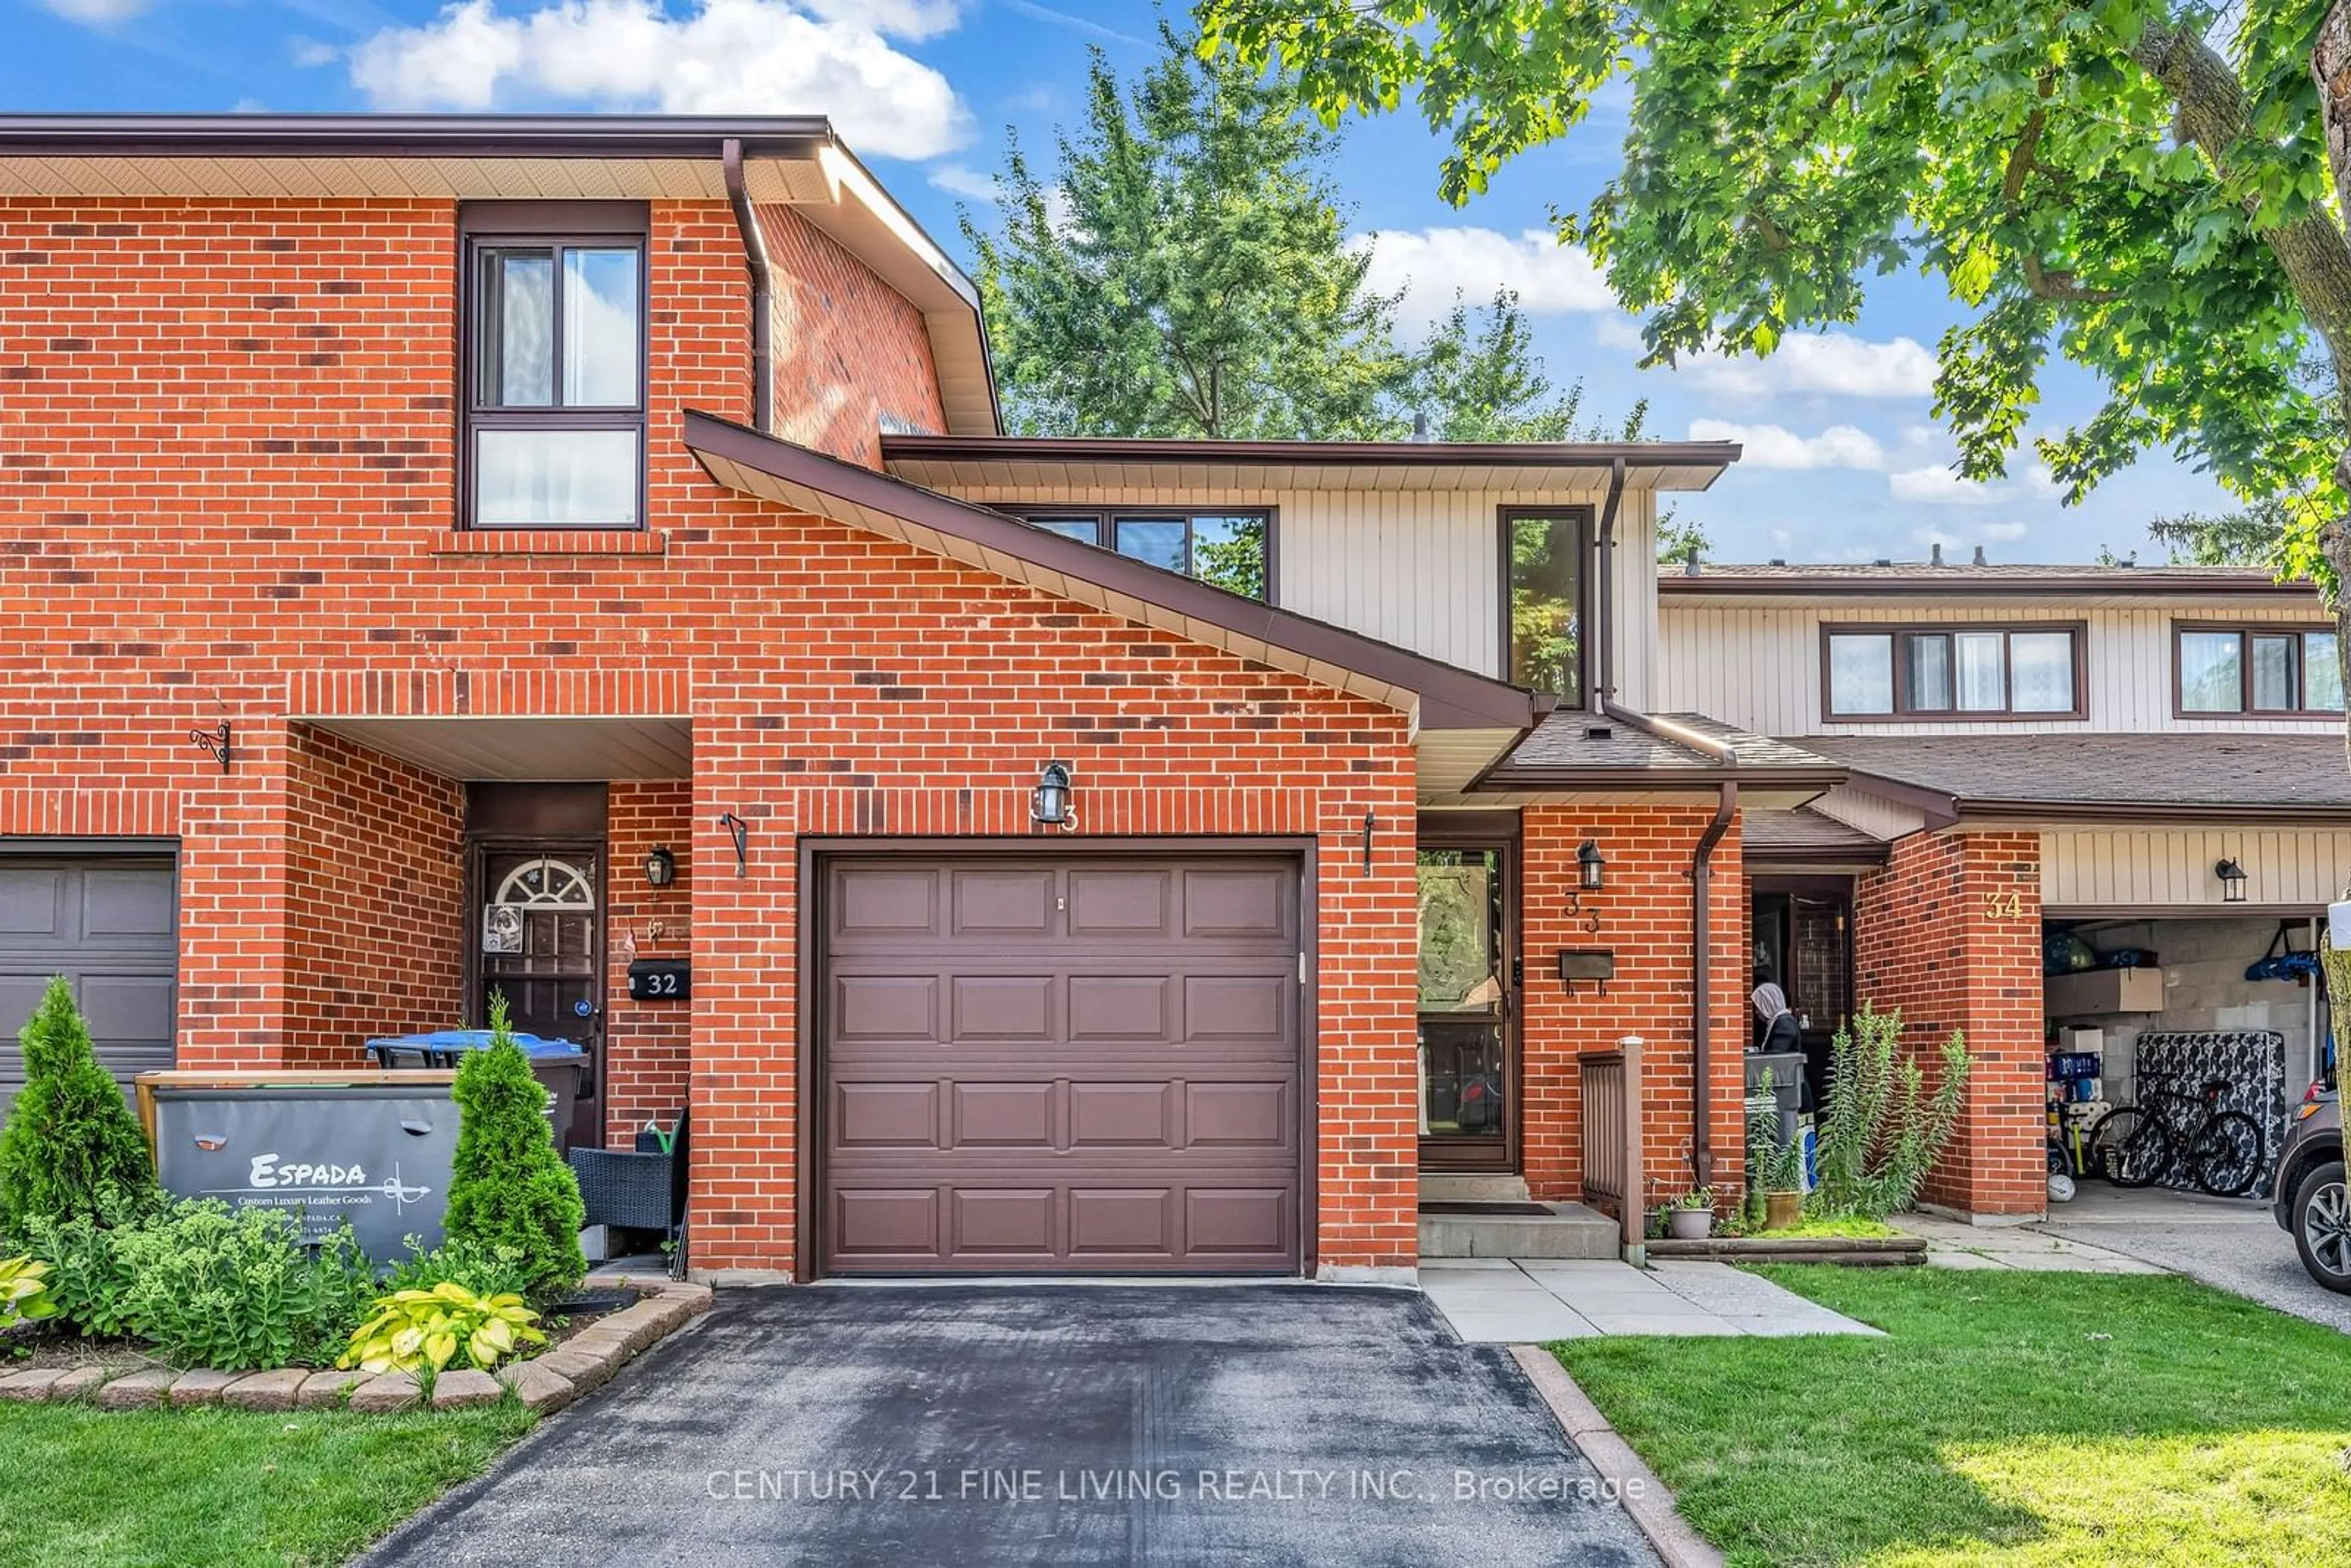 Home with brick exterior material for 33 Dawson Cres, Brampton Ontario L6V 3M5